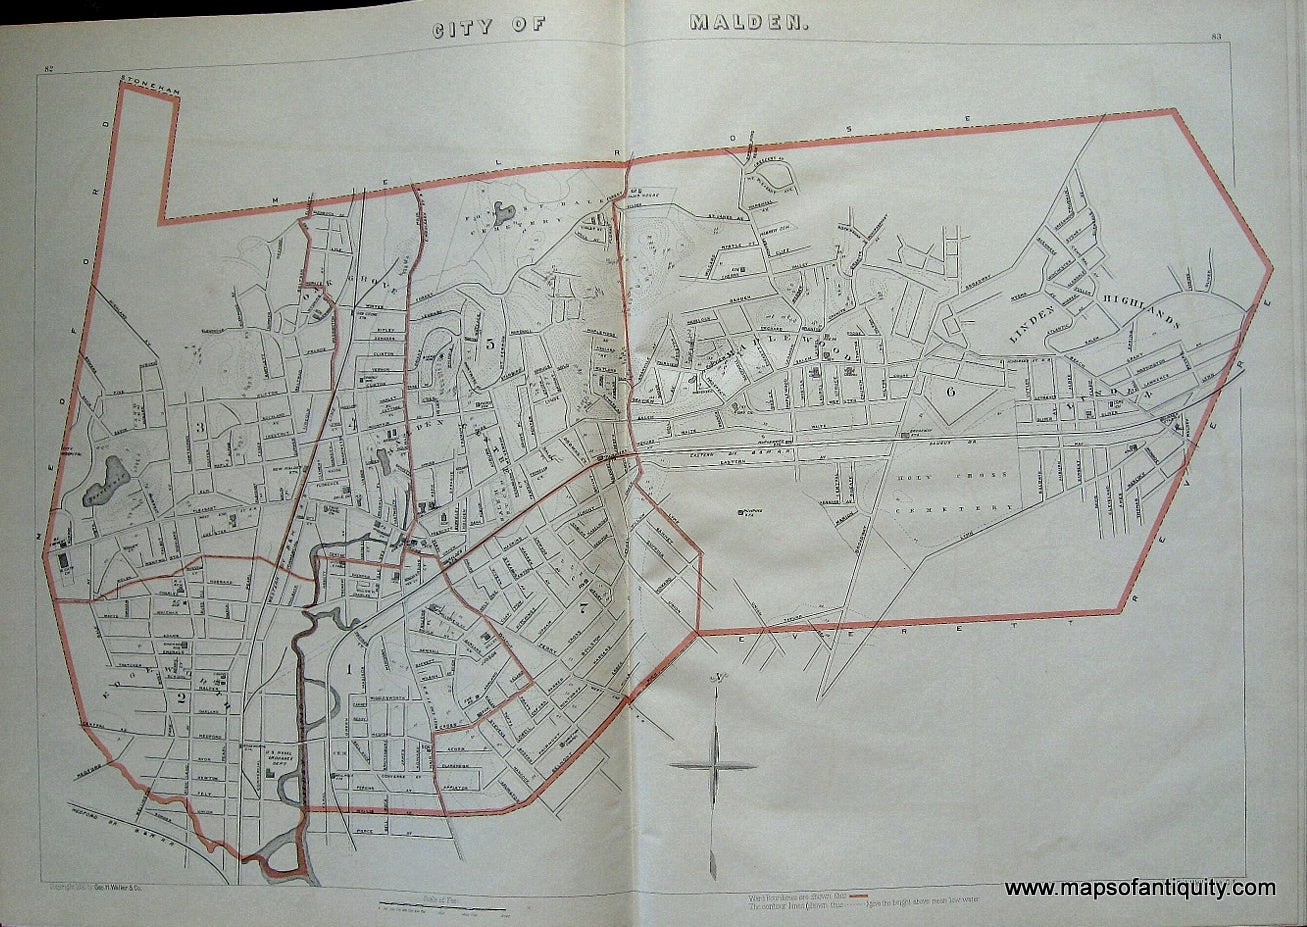 Antique-Printed-Color-Map-City-of-Malden-(MA)-Massachusetts-Malden-1891-G.-H.-Walker-Maps-Of-Antiquity